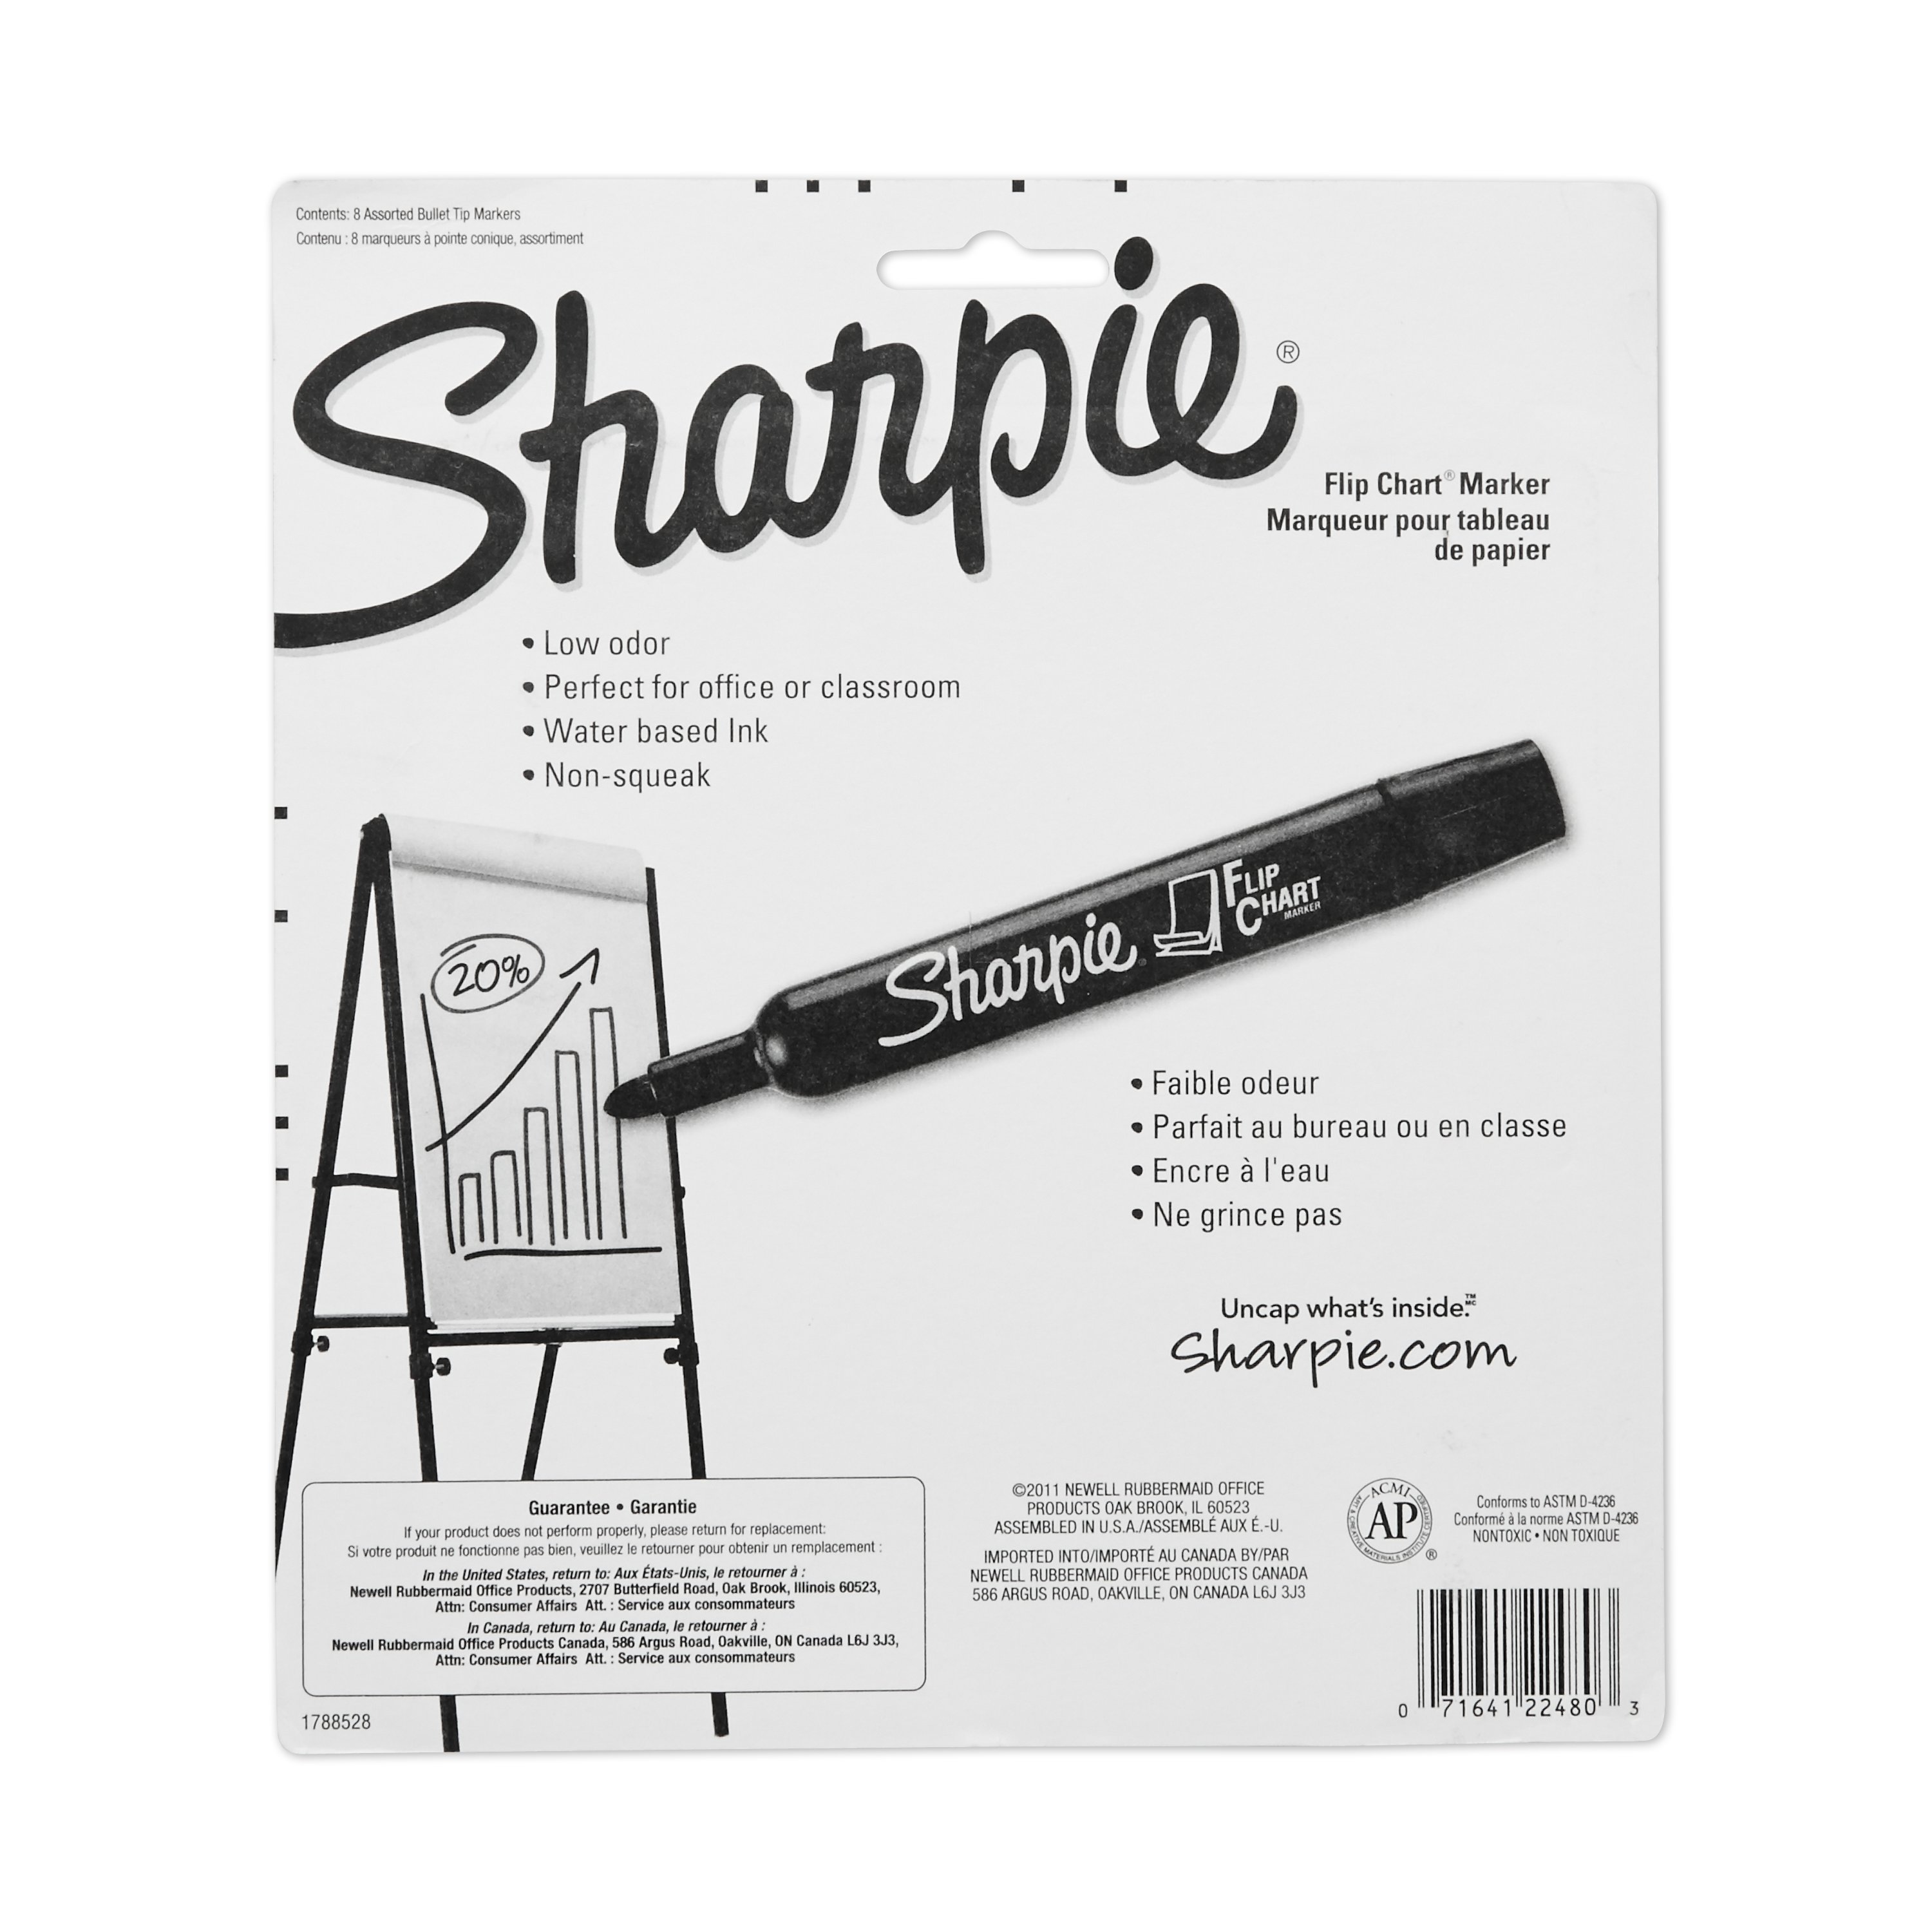 Sharpie Flip Chart Coloured Bullet Markers